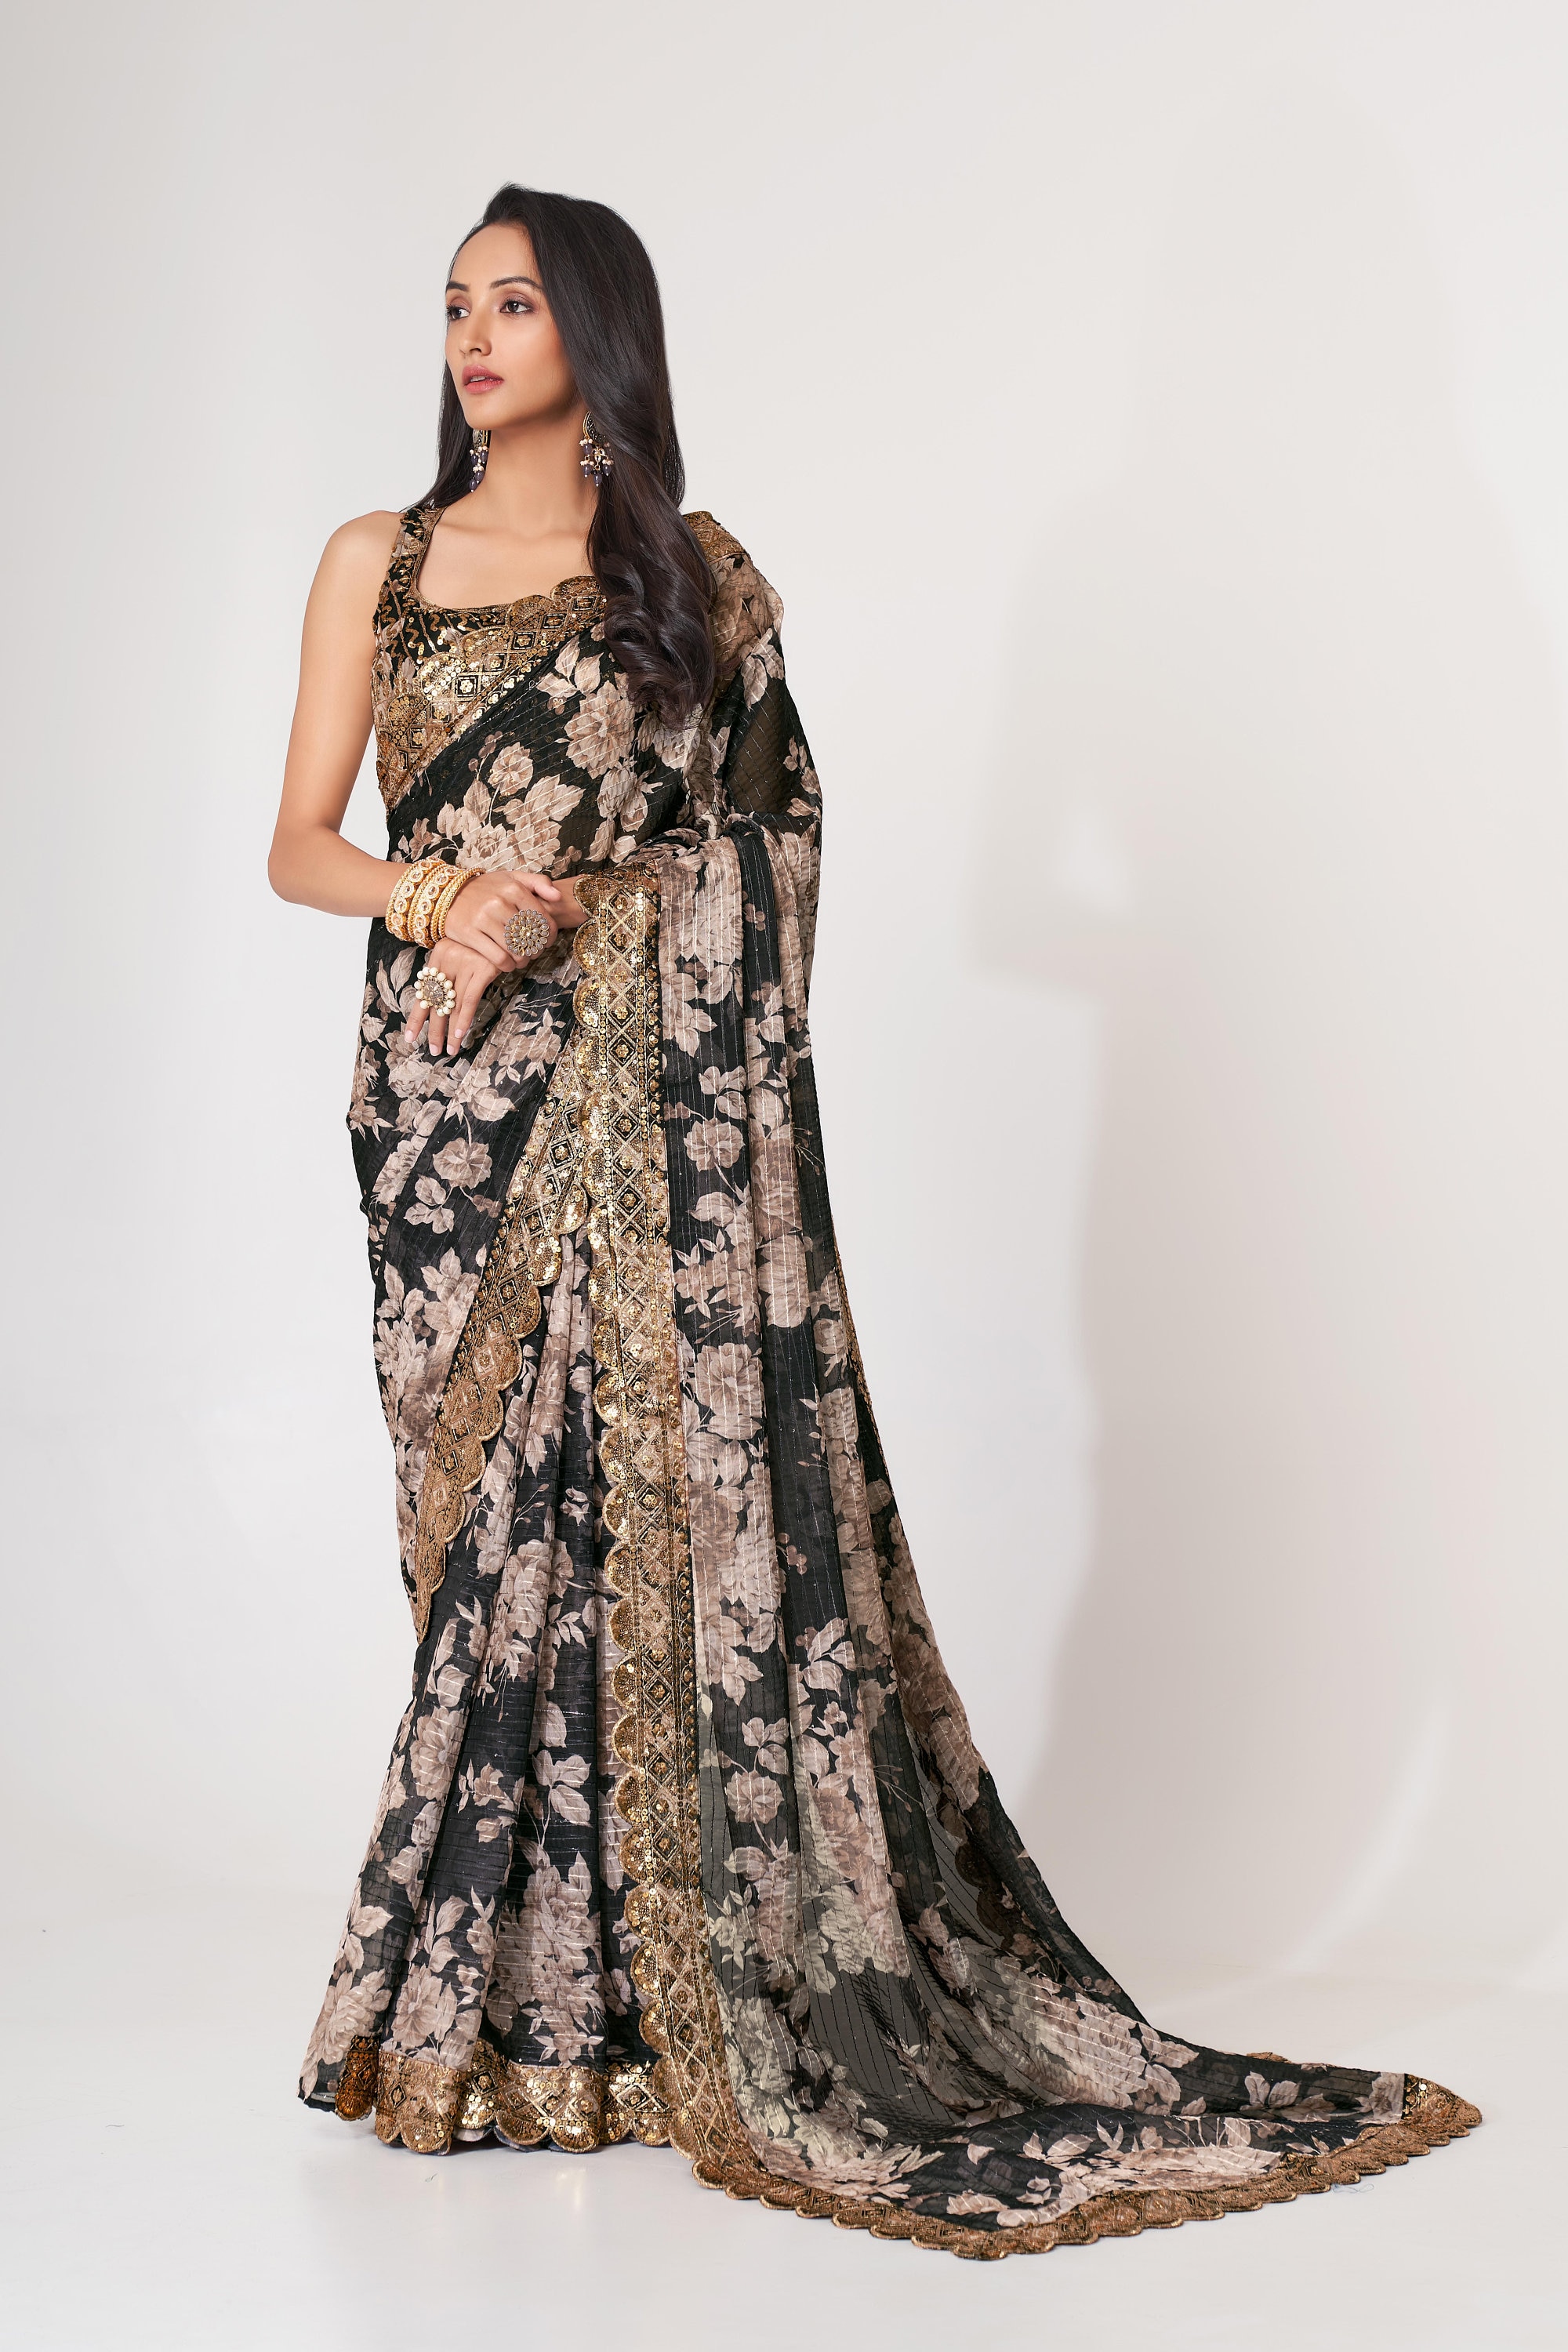 Kajol Saree in Black Organza With Print and Embroidery Lace Bollywood Saree  in USA, UK, Malaysia, South Africa, Dubai, Singapore